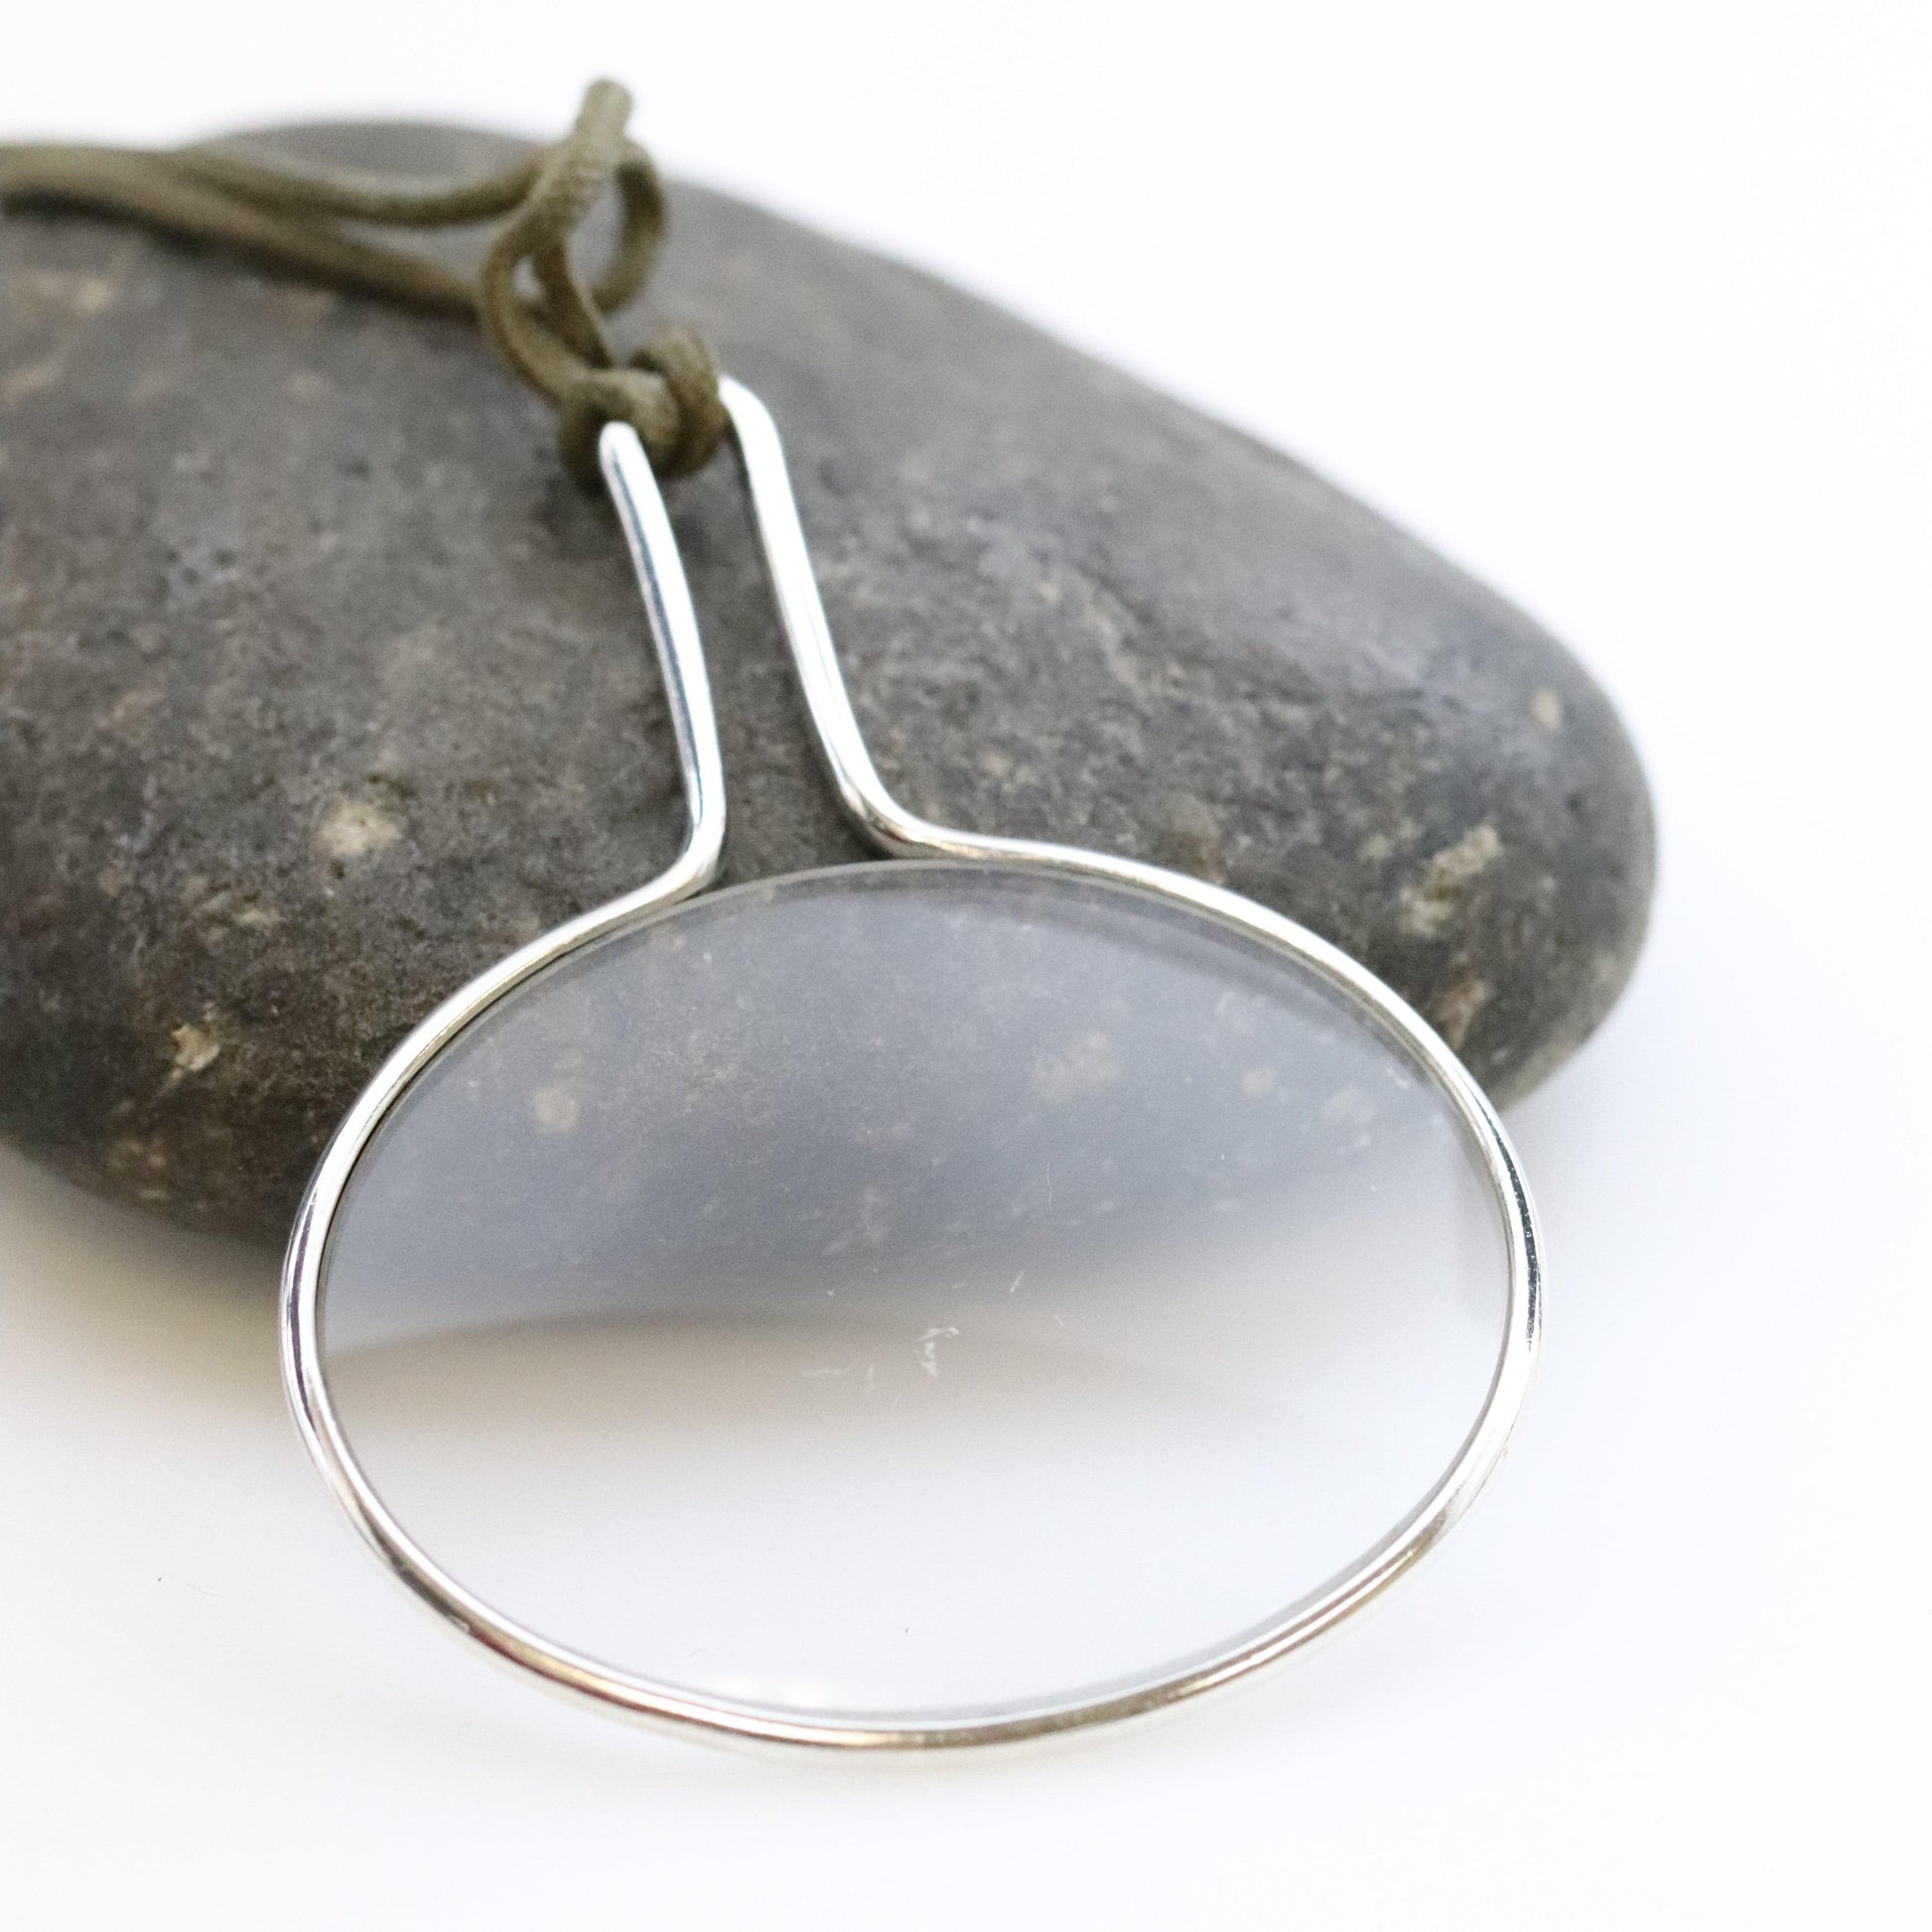 Vintage Georg Jensen Jewelry | Mid Century Magnifying Glass Pendant Necklace 400 - Carmel Fine Silver Jewelry